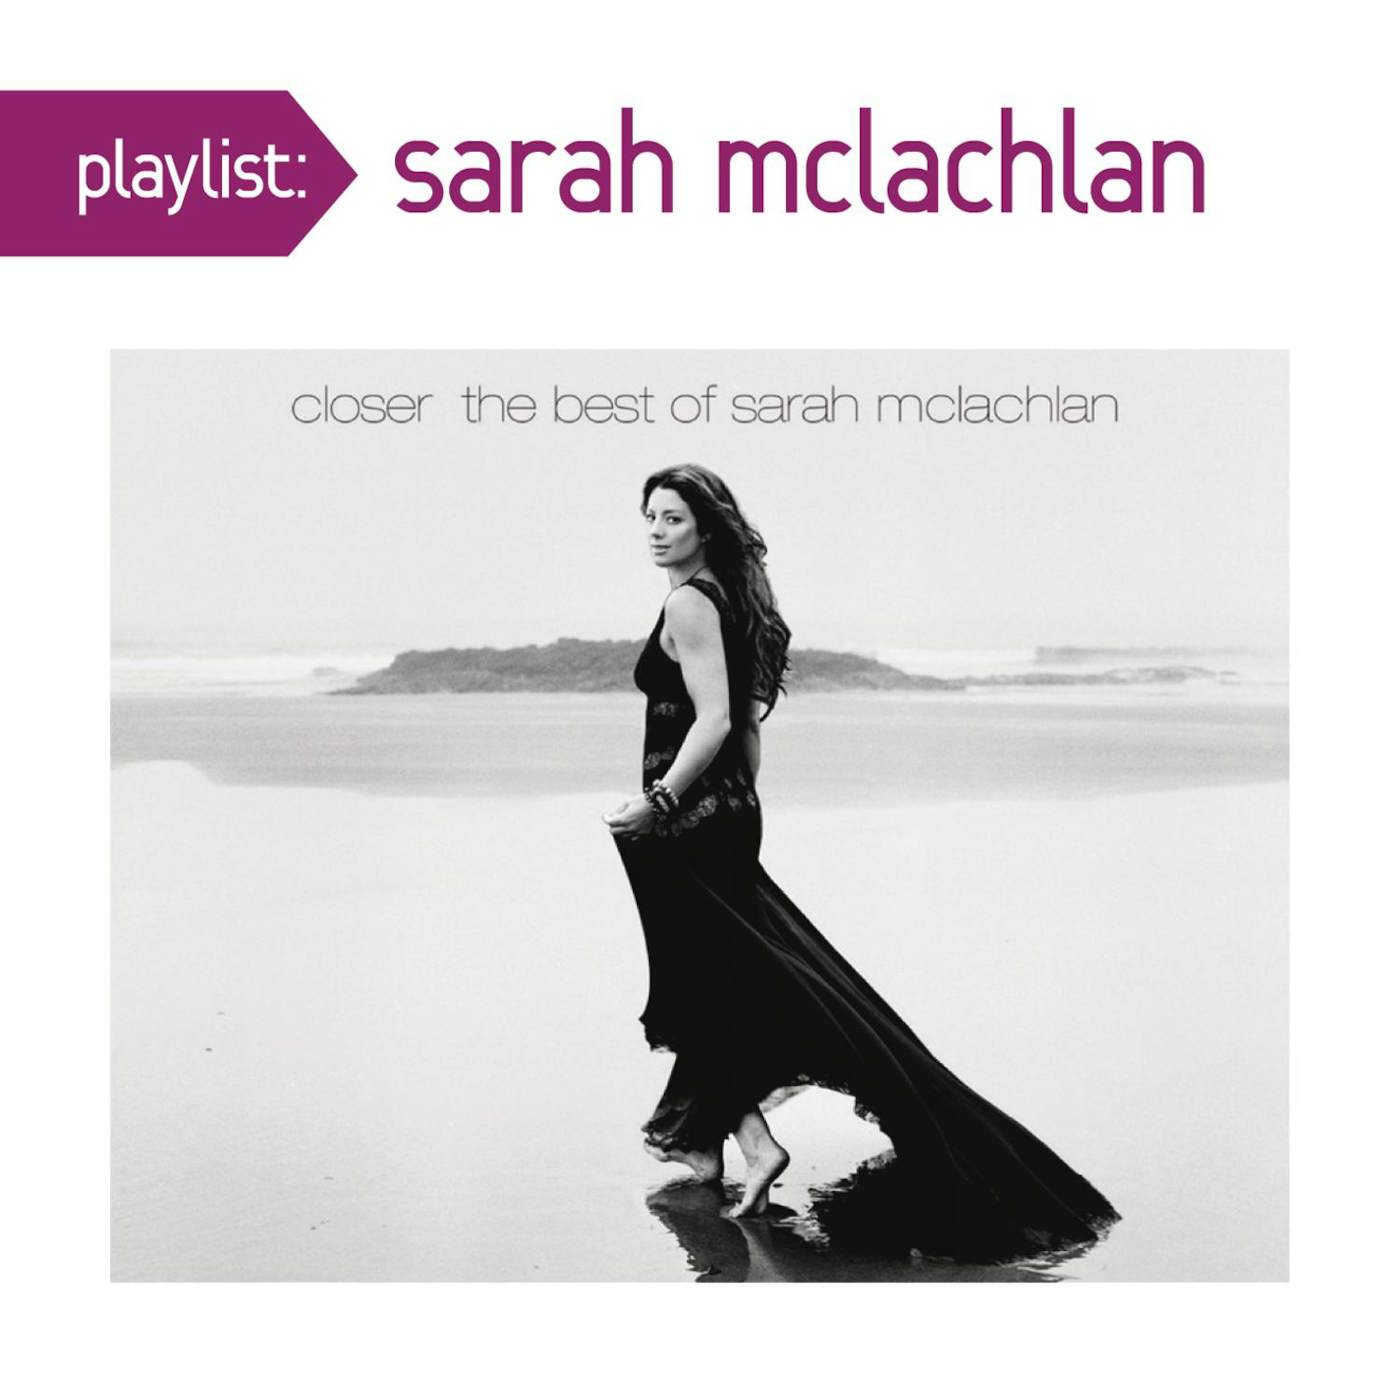 Sarah McLachlan PLAYLIST: VERY BEST OF CD